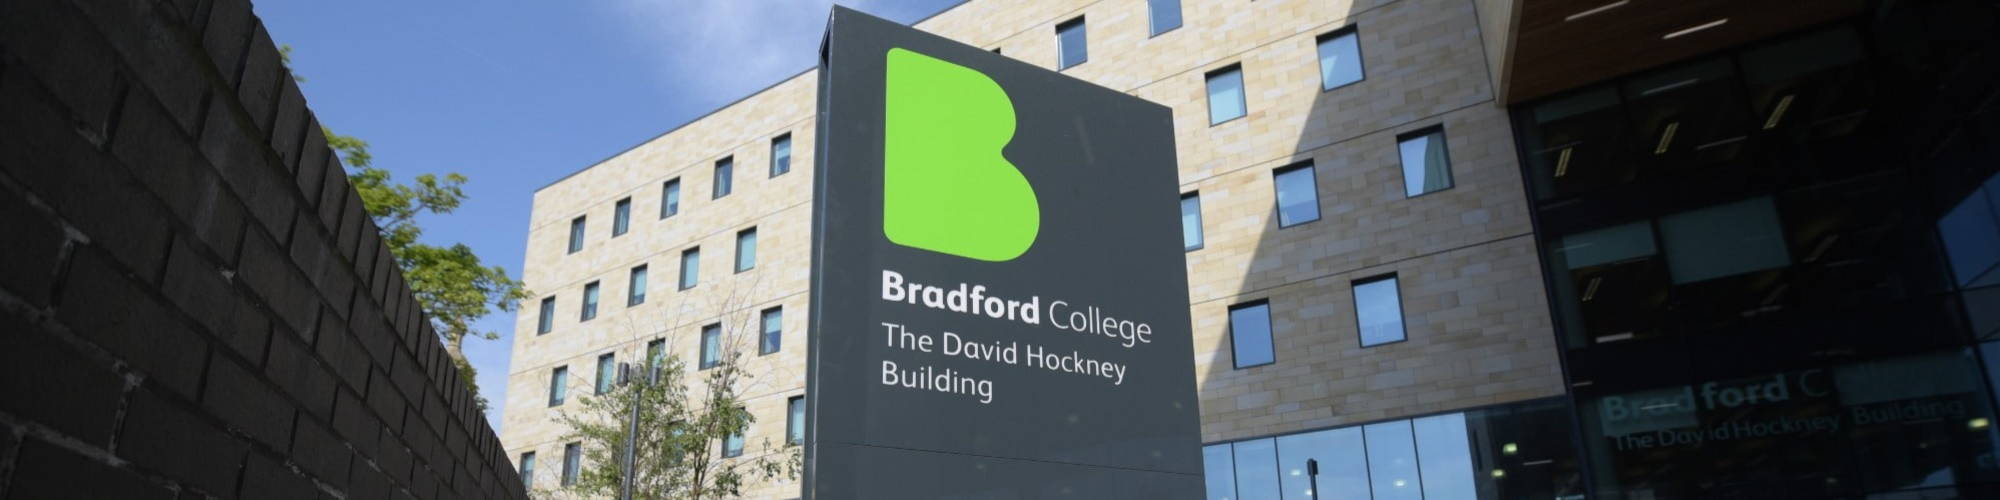 Bradford College David Hockney Building